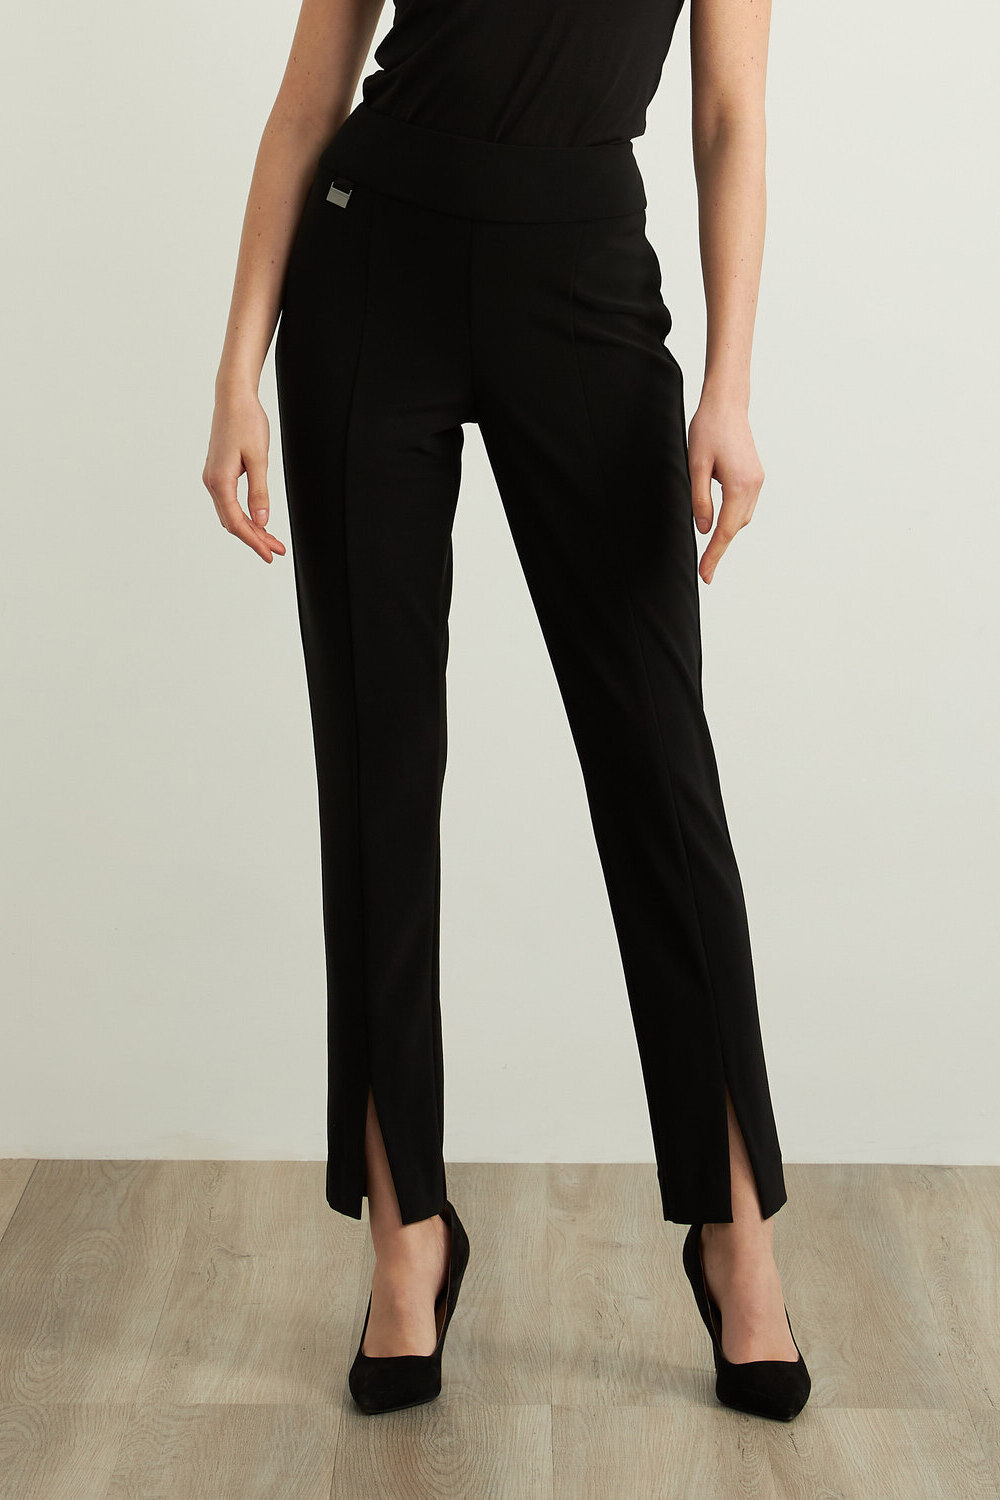 Joseph Ribkoff Slim Fit Pants Style 213583. Black